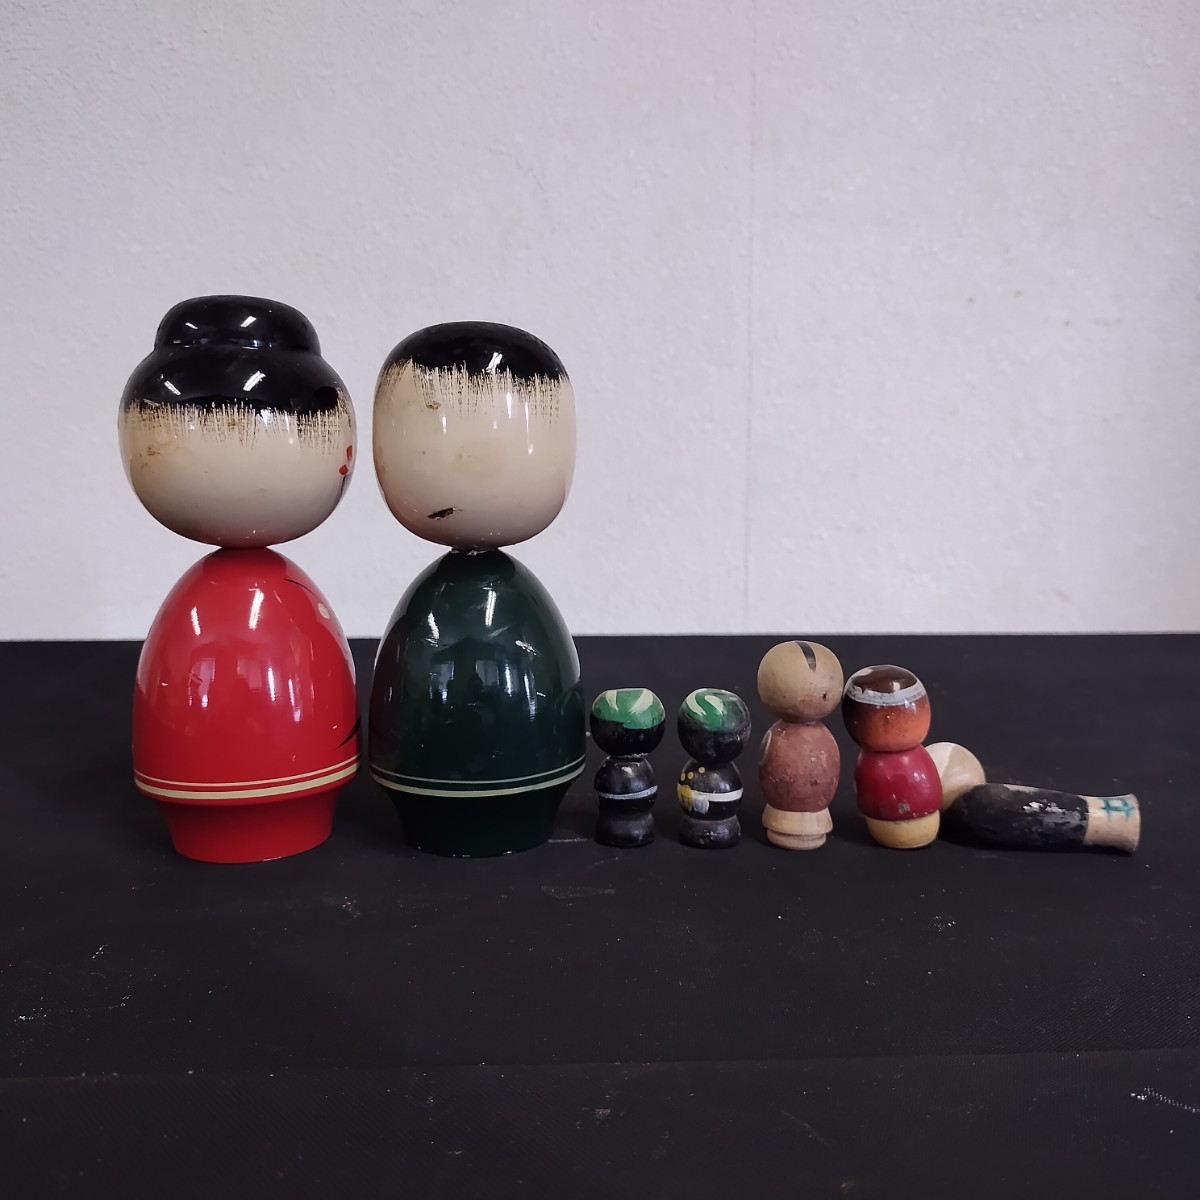 NR730 こけし 伝統こけし 郷土玩具 民芸品 伝統工芸 創作こけし 日本人形 まとめ 人形 レトロ インテリア コレクション_画像9